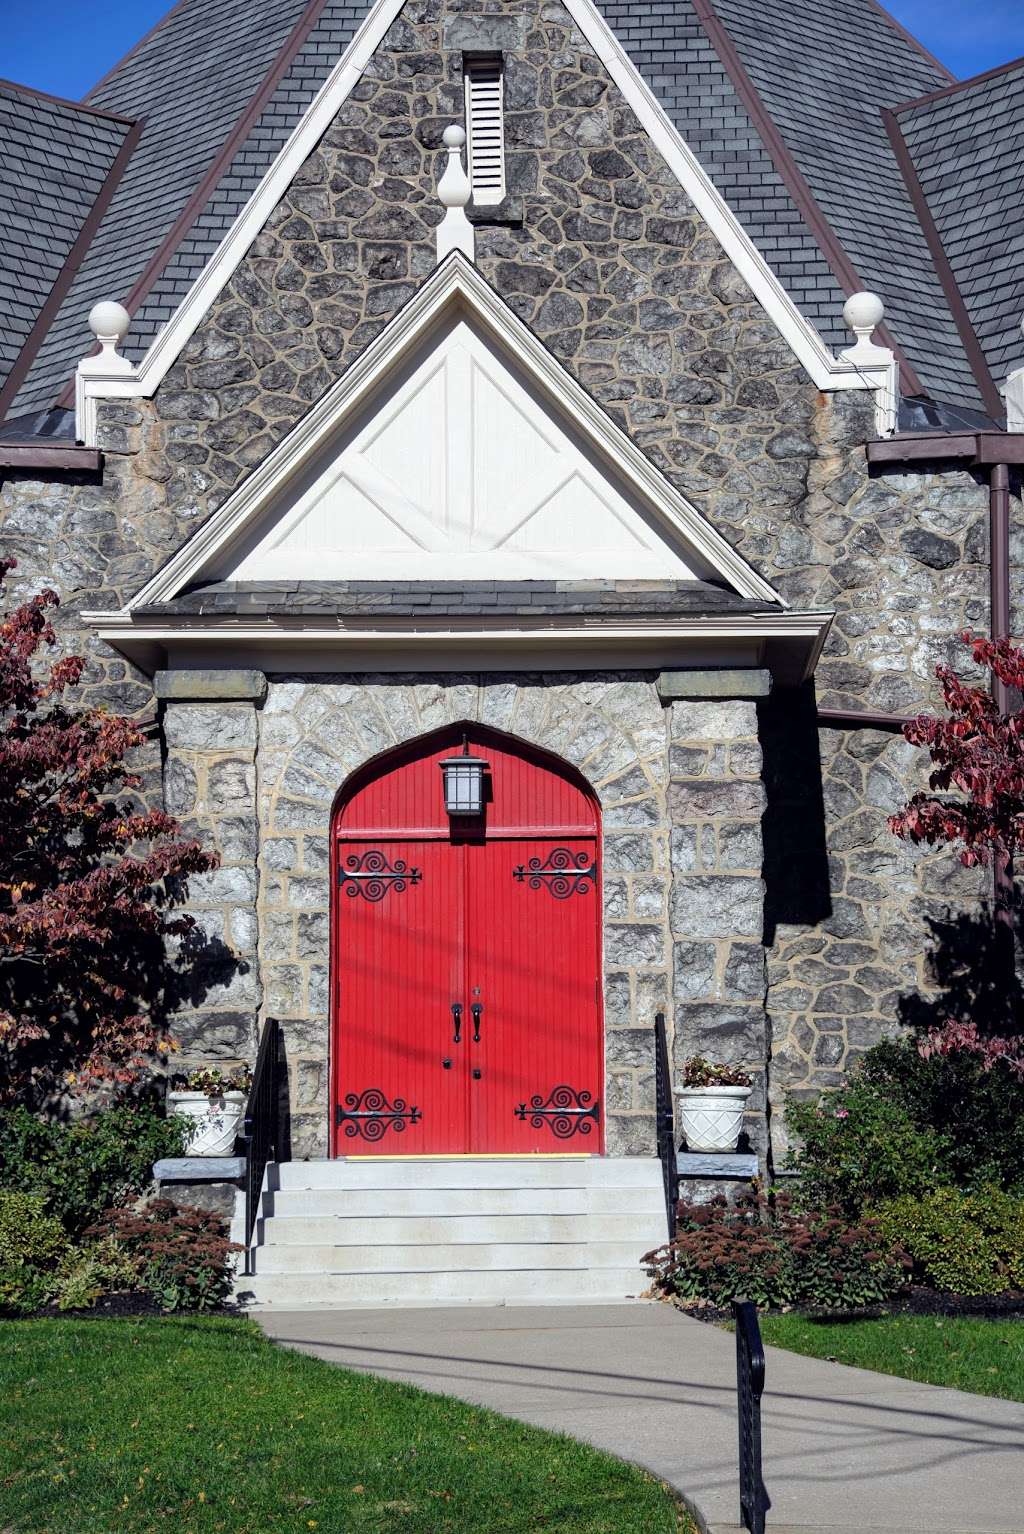 College Hill Presbyterian Church | 501 Brodhead St, Easton, PA 18042 | Phone: (610) 253-4792